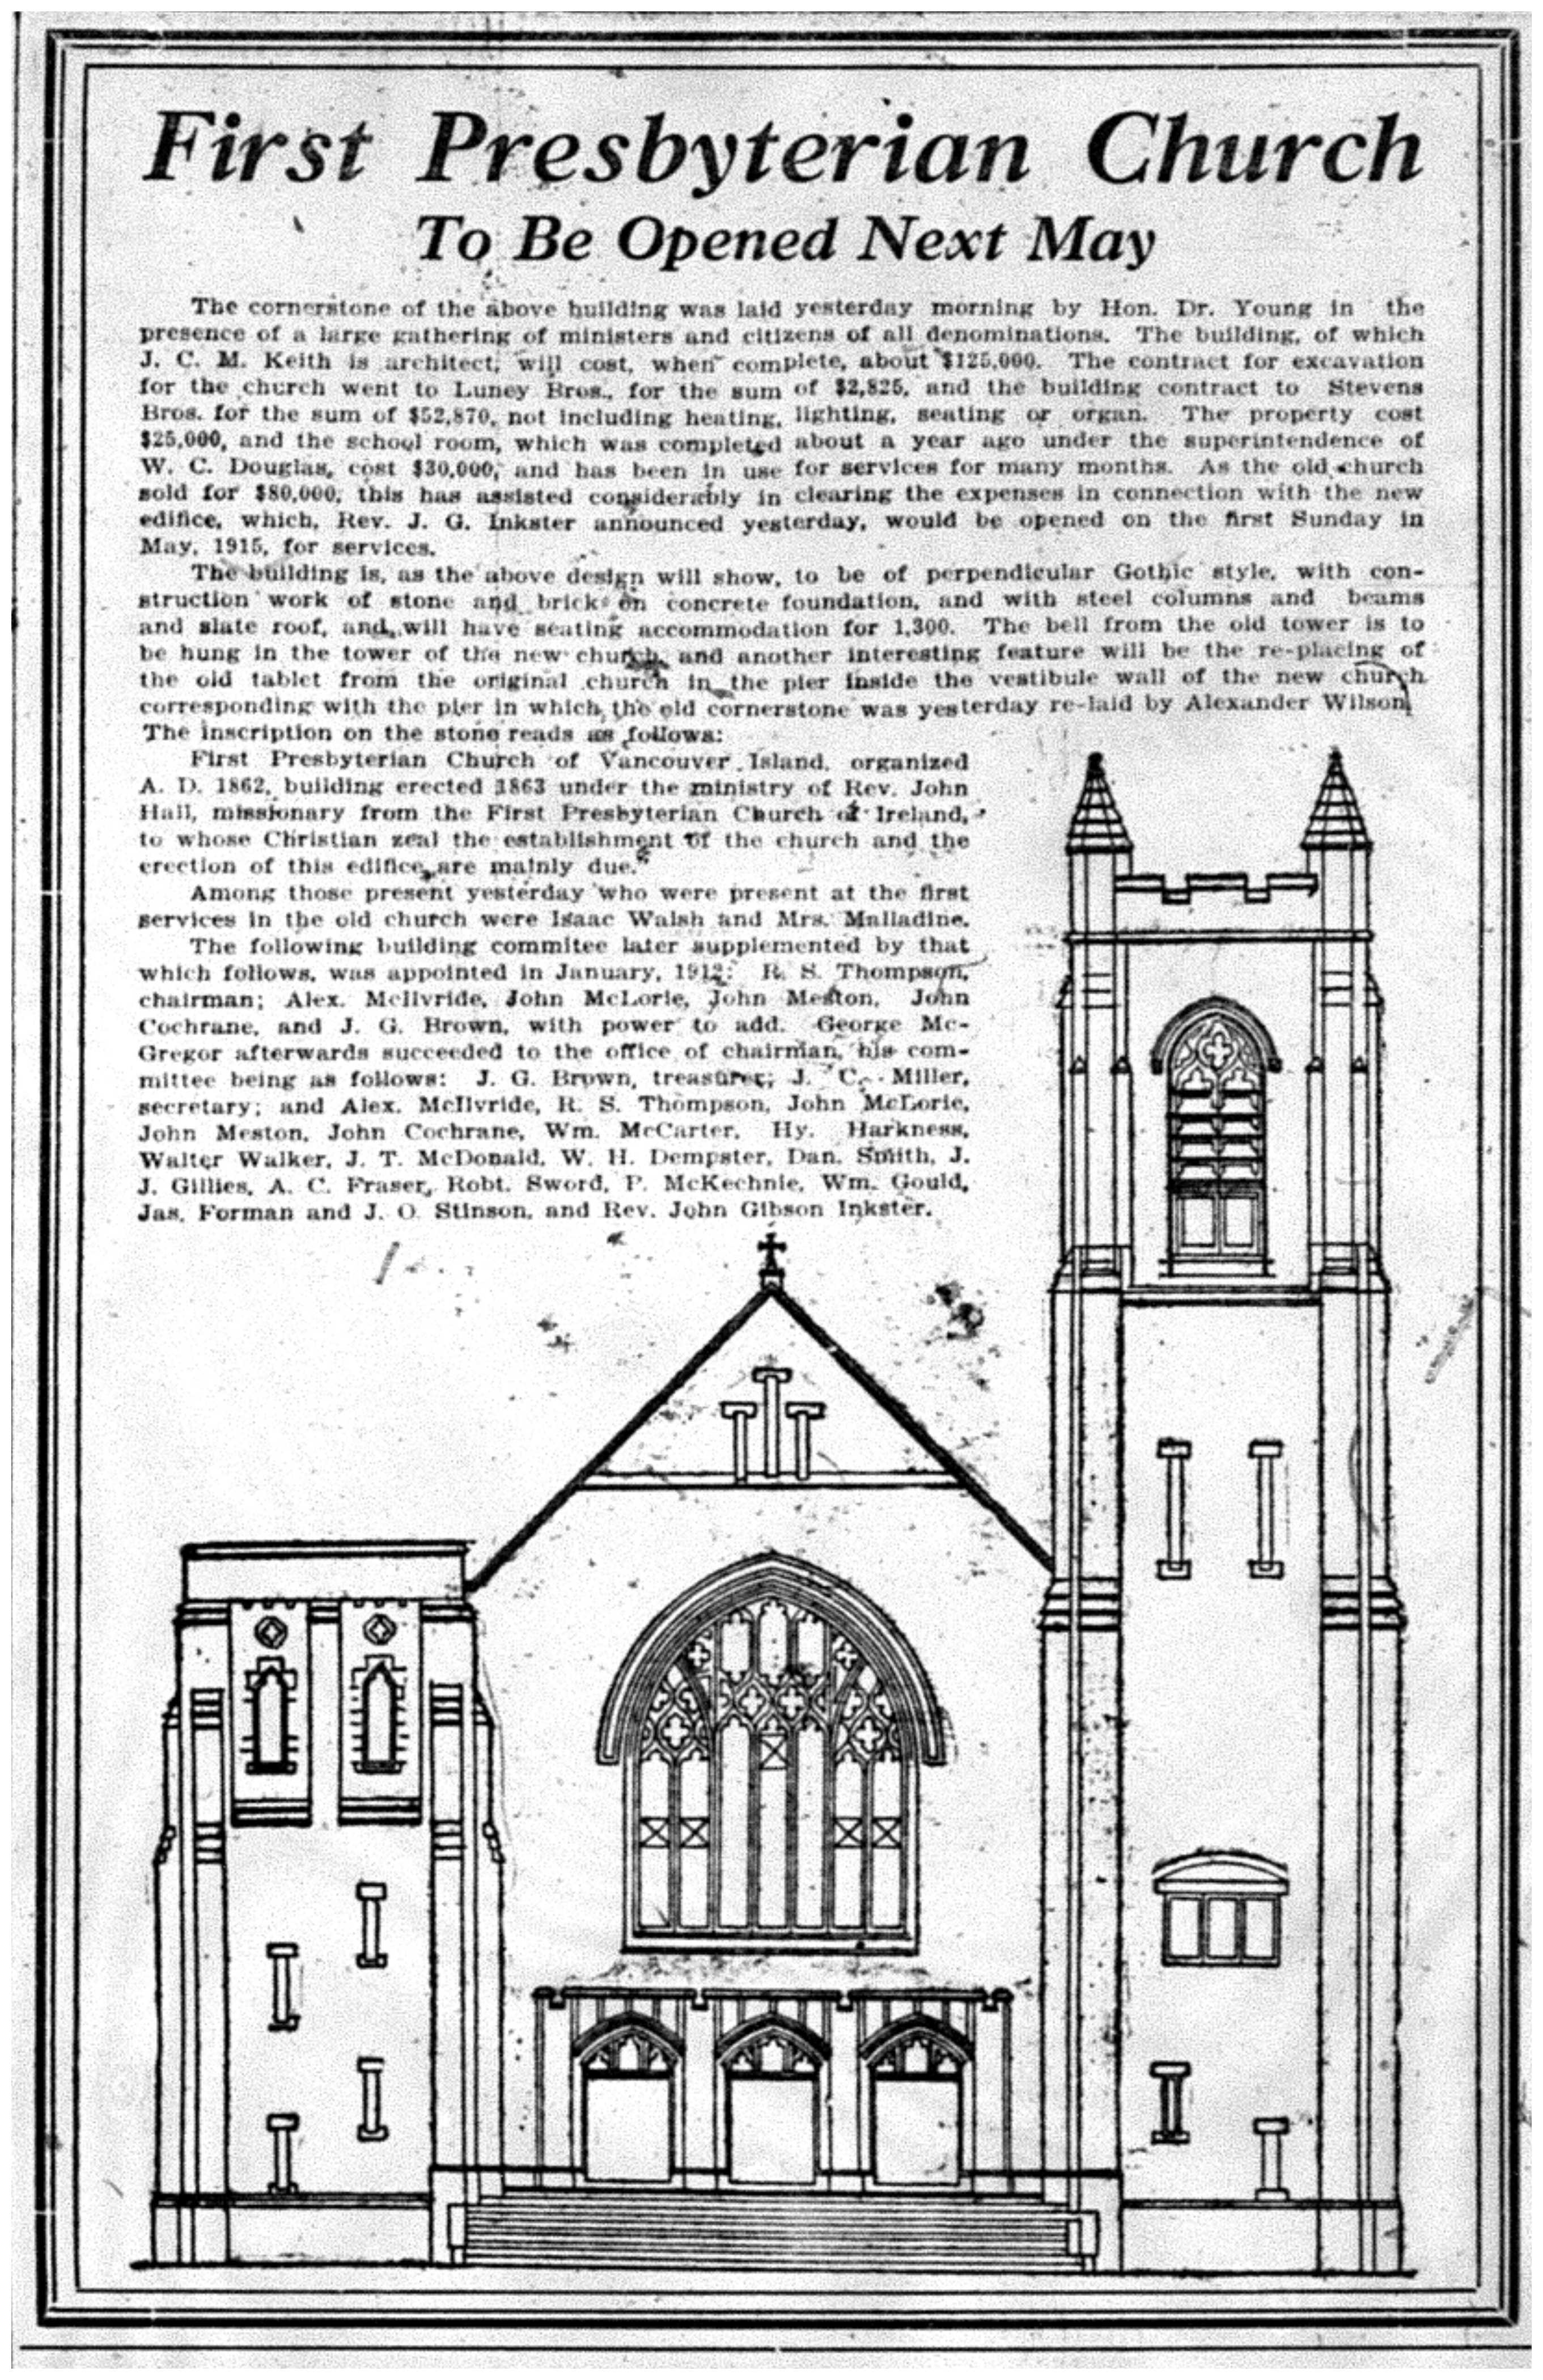 "First Presbyterian Church"